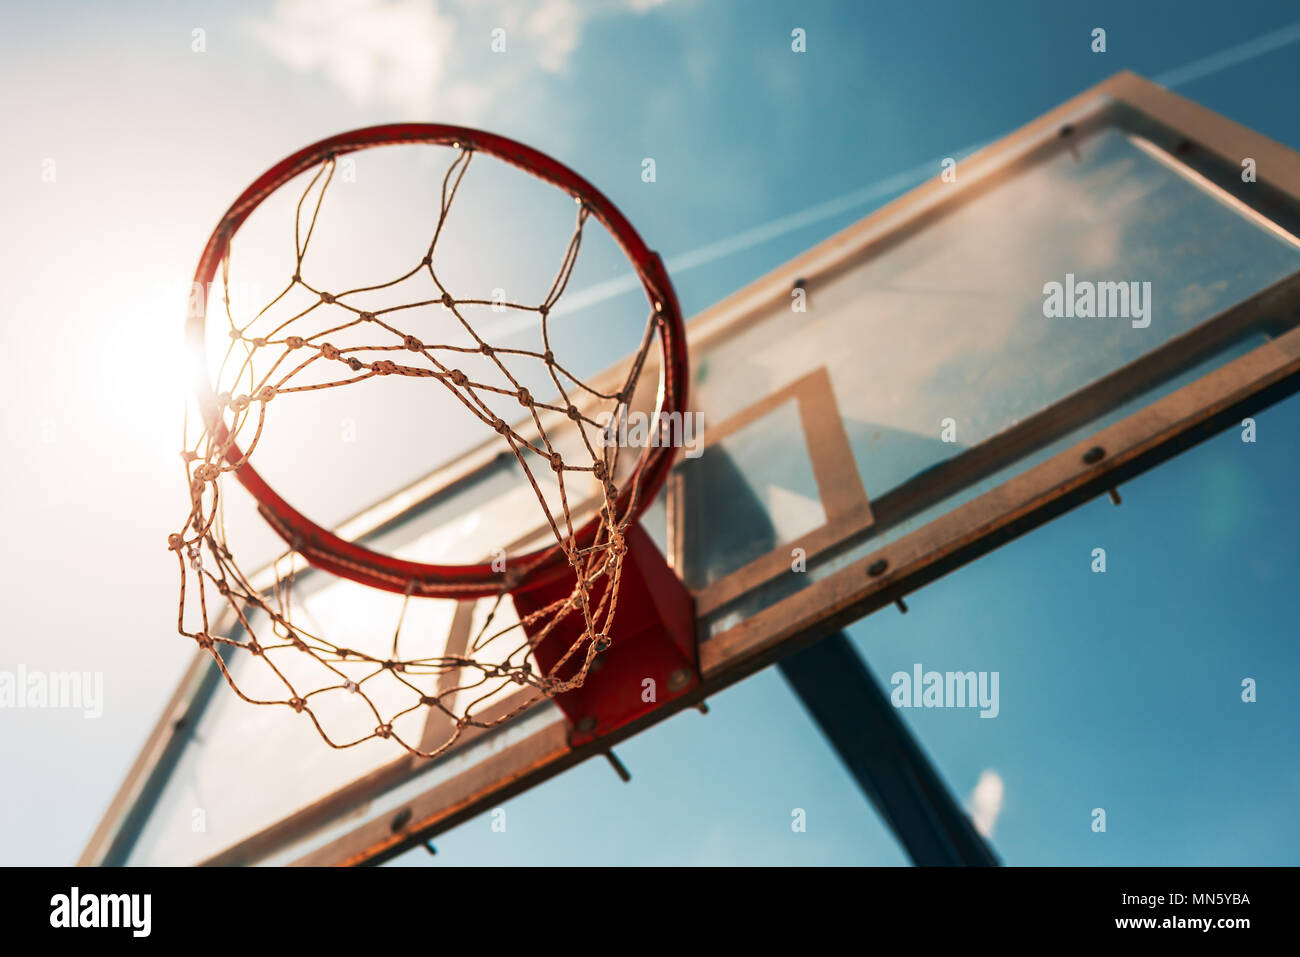 Sunlight shining through basketball hoop with net Stock Photo